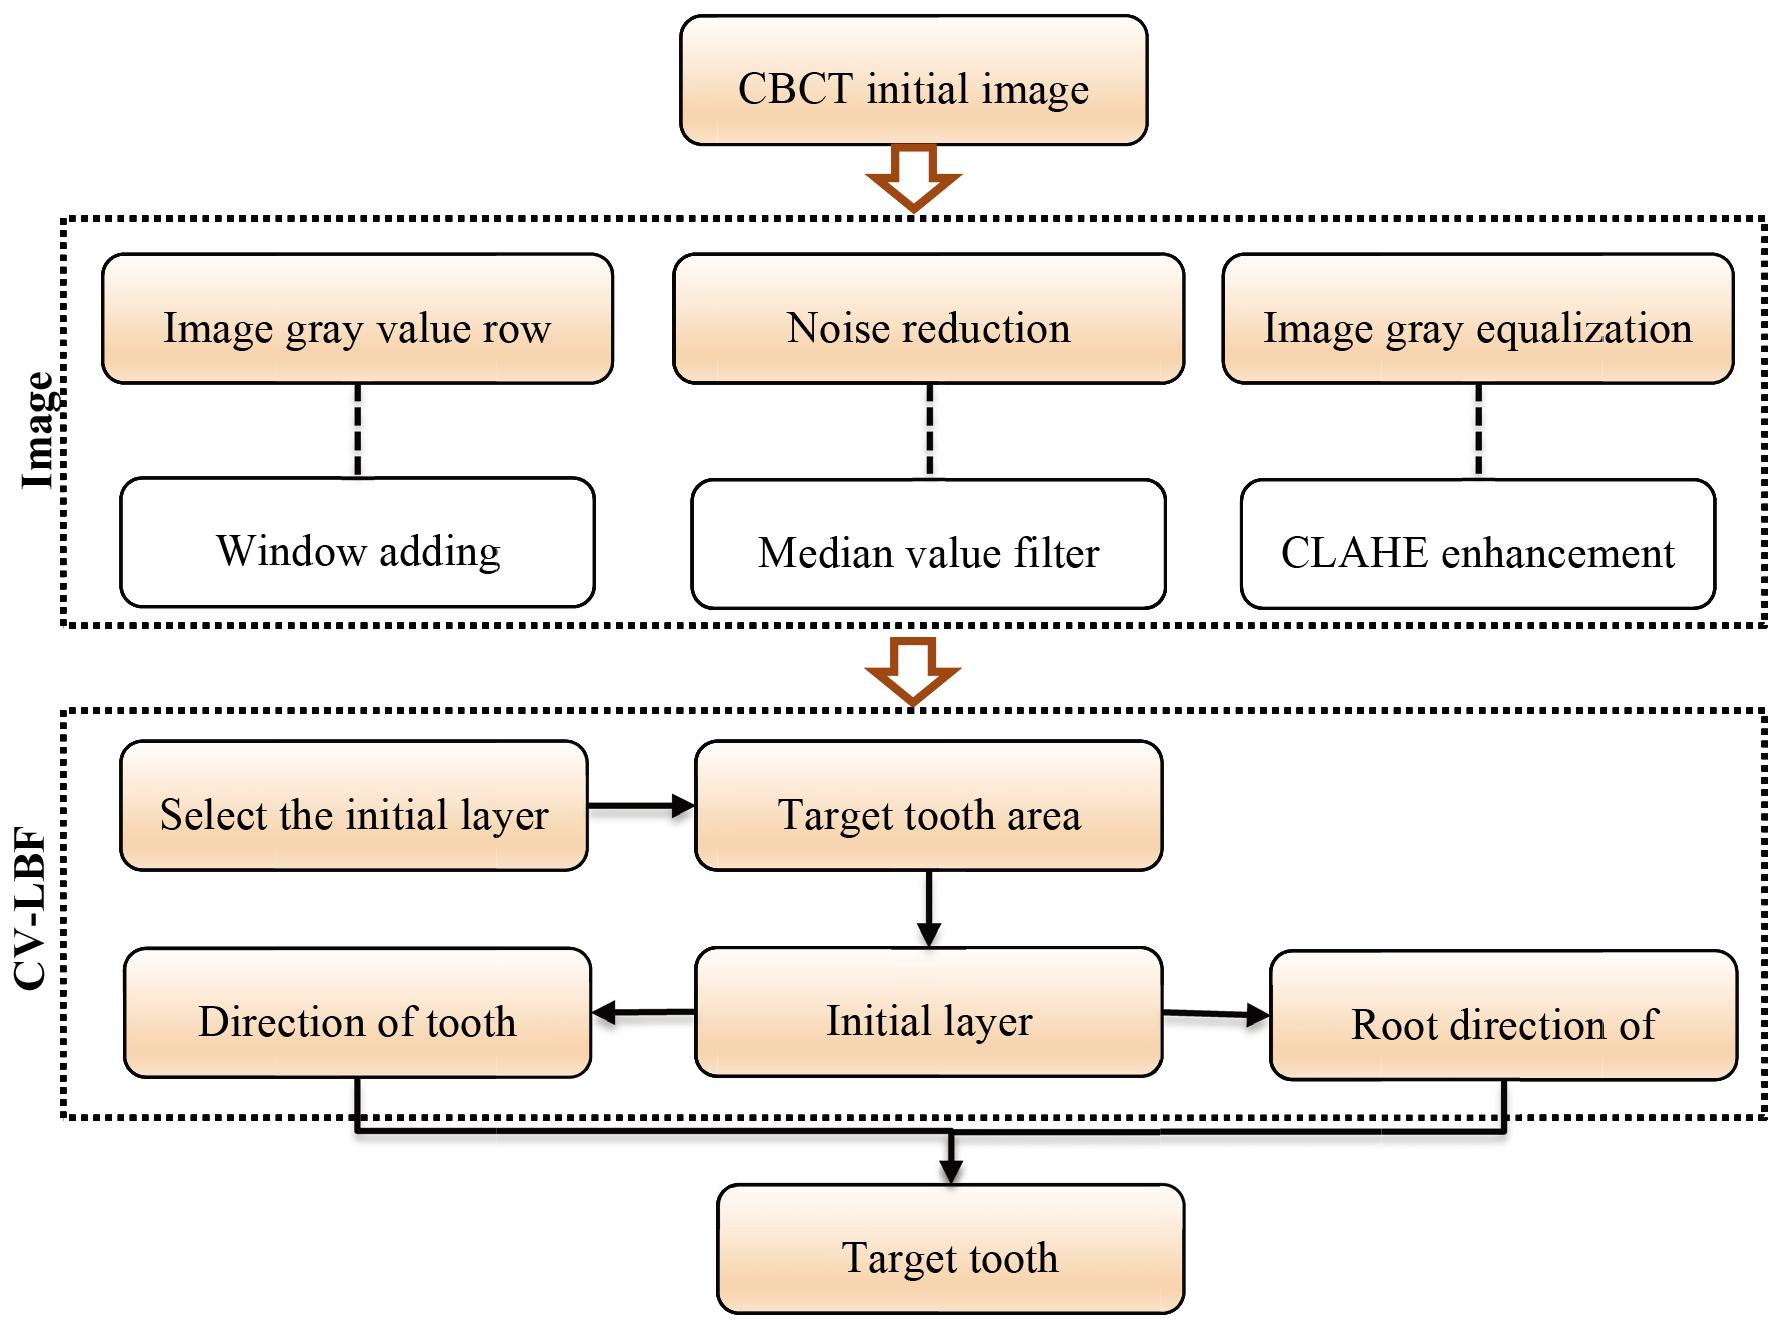 Flowchart of CBCT images of teeth segmented by CV-LBF model.